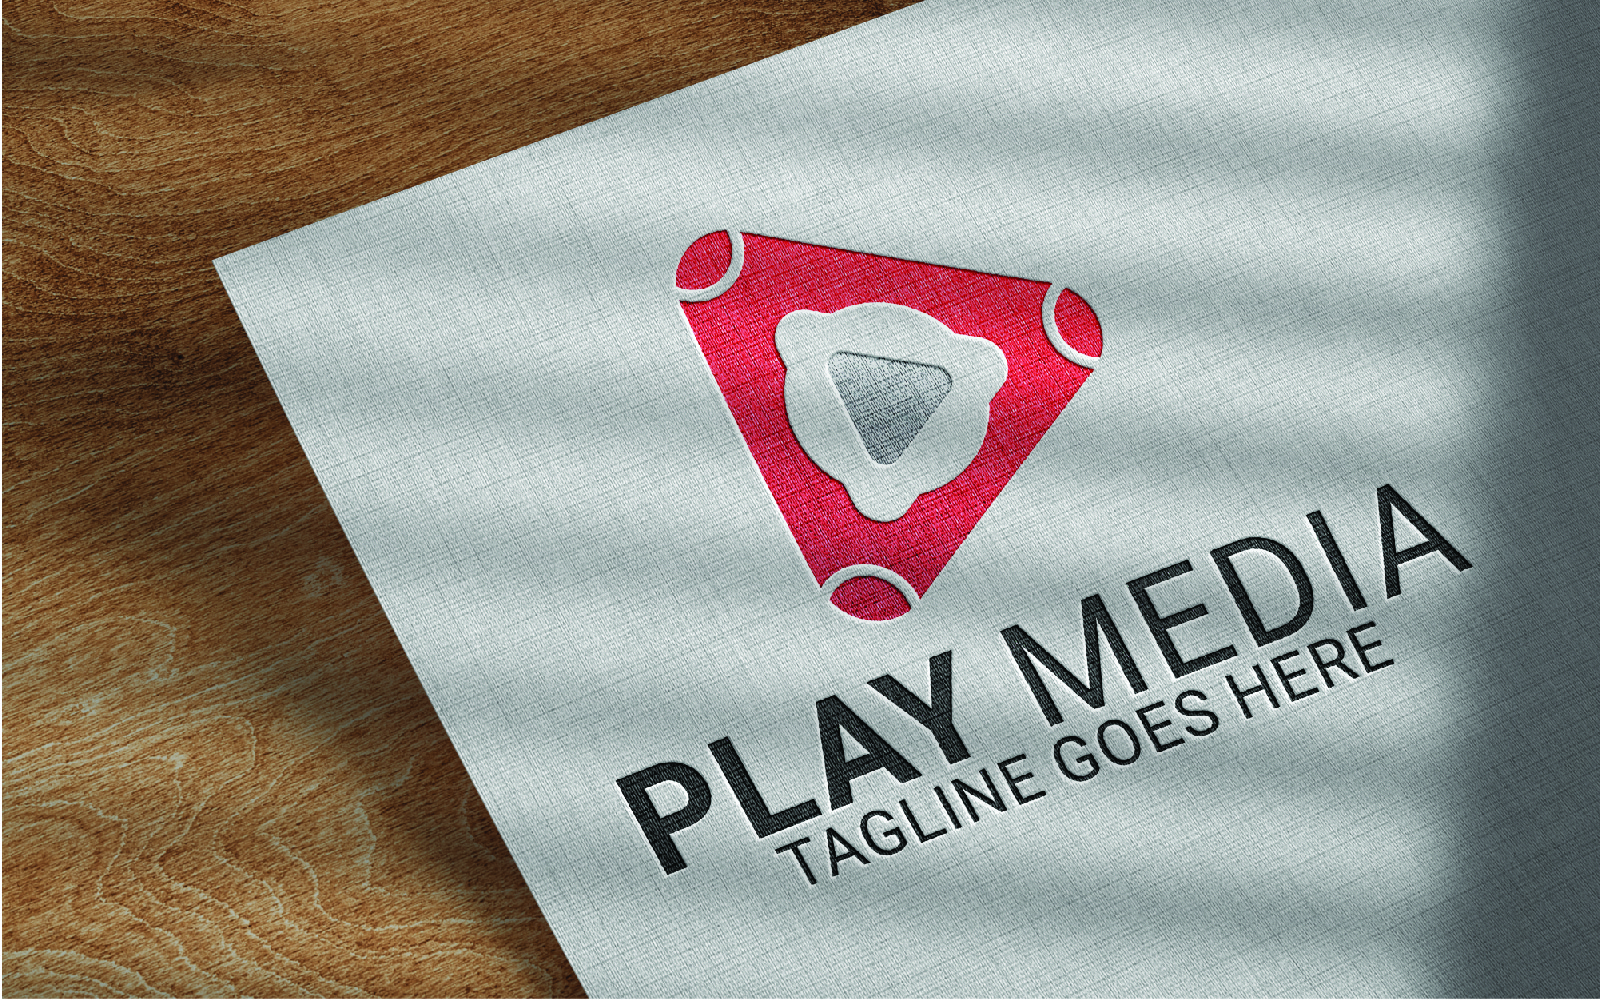 Media Business Vector Logo Design Template